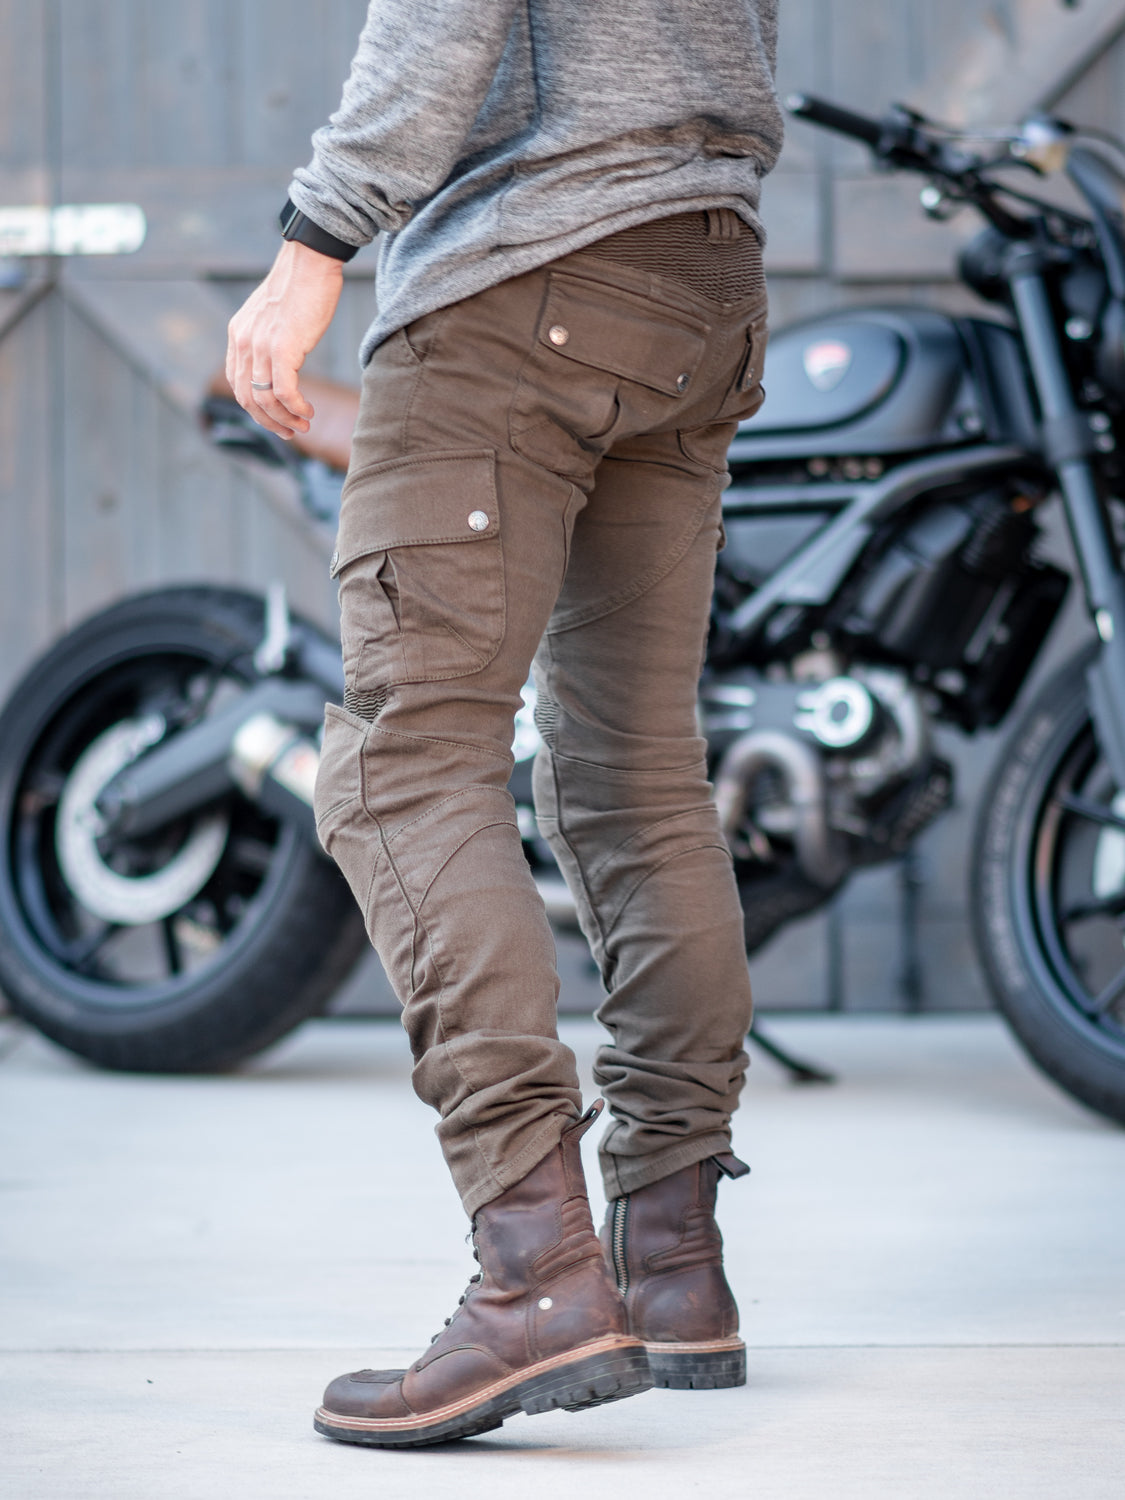 uglybros motorcycle jeans